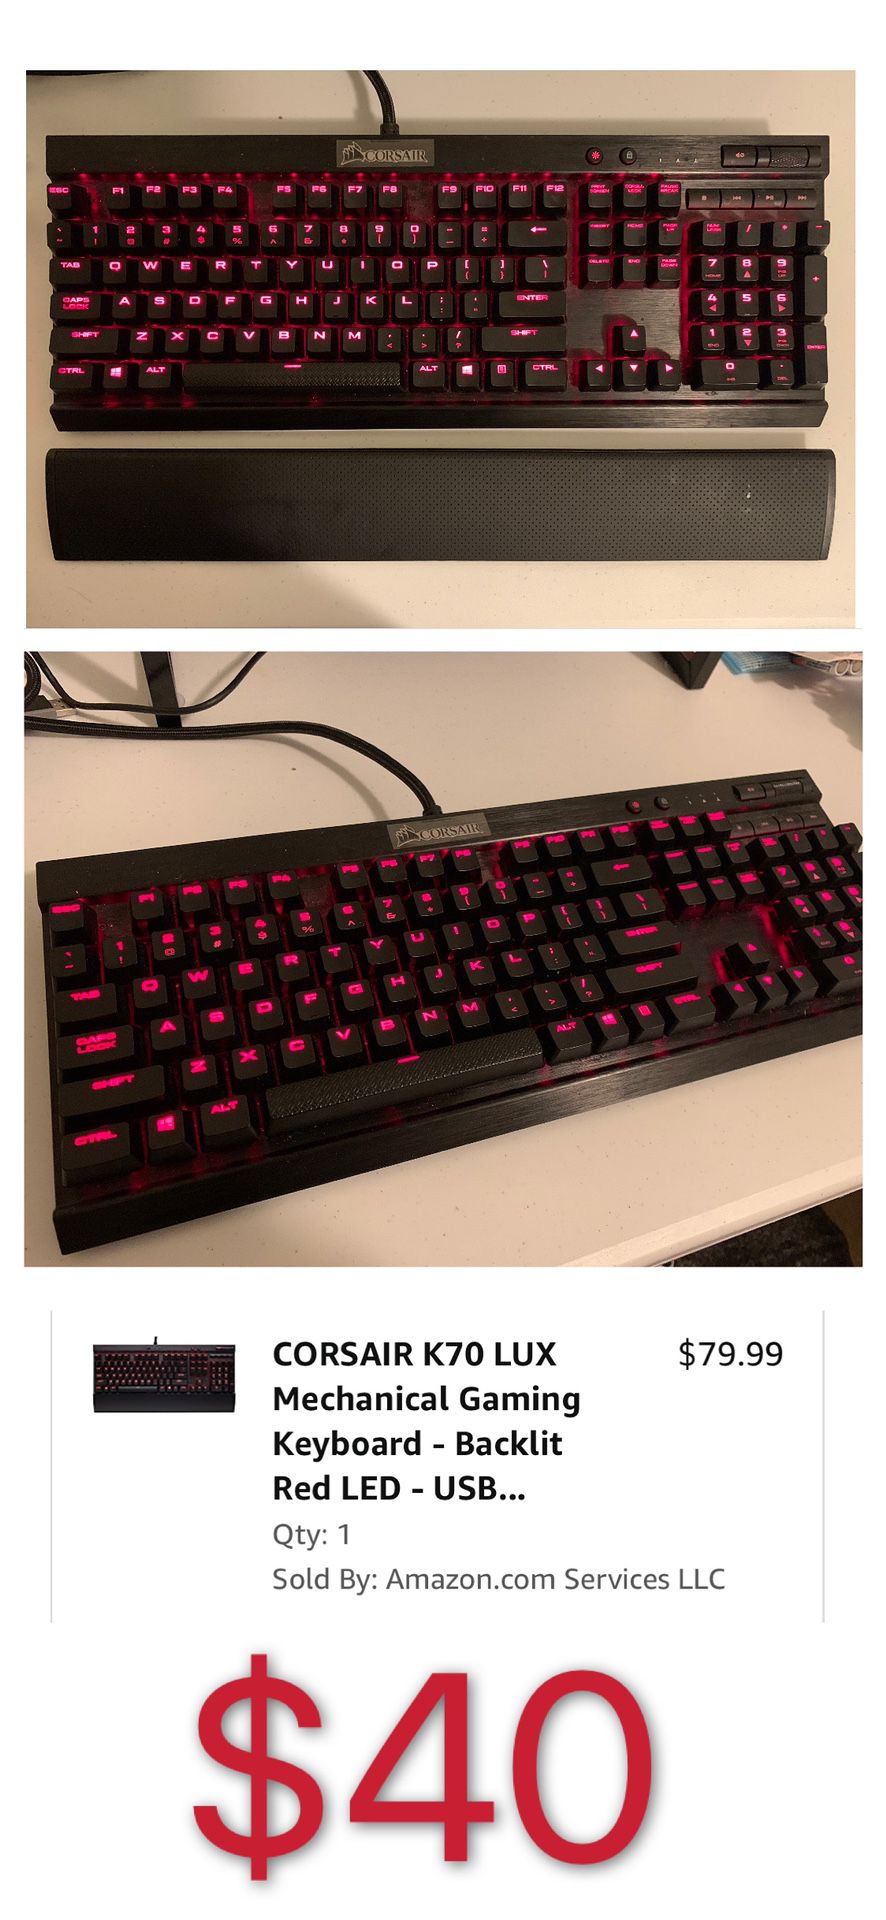 CORSAIR K70 LUX Mechanical Gaming Keyboard Cherry MX red